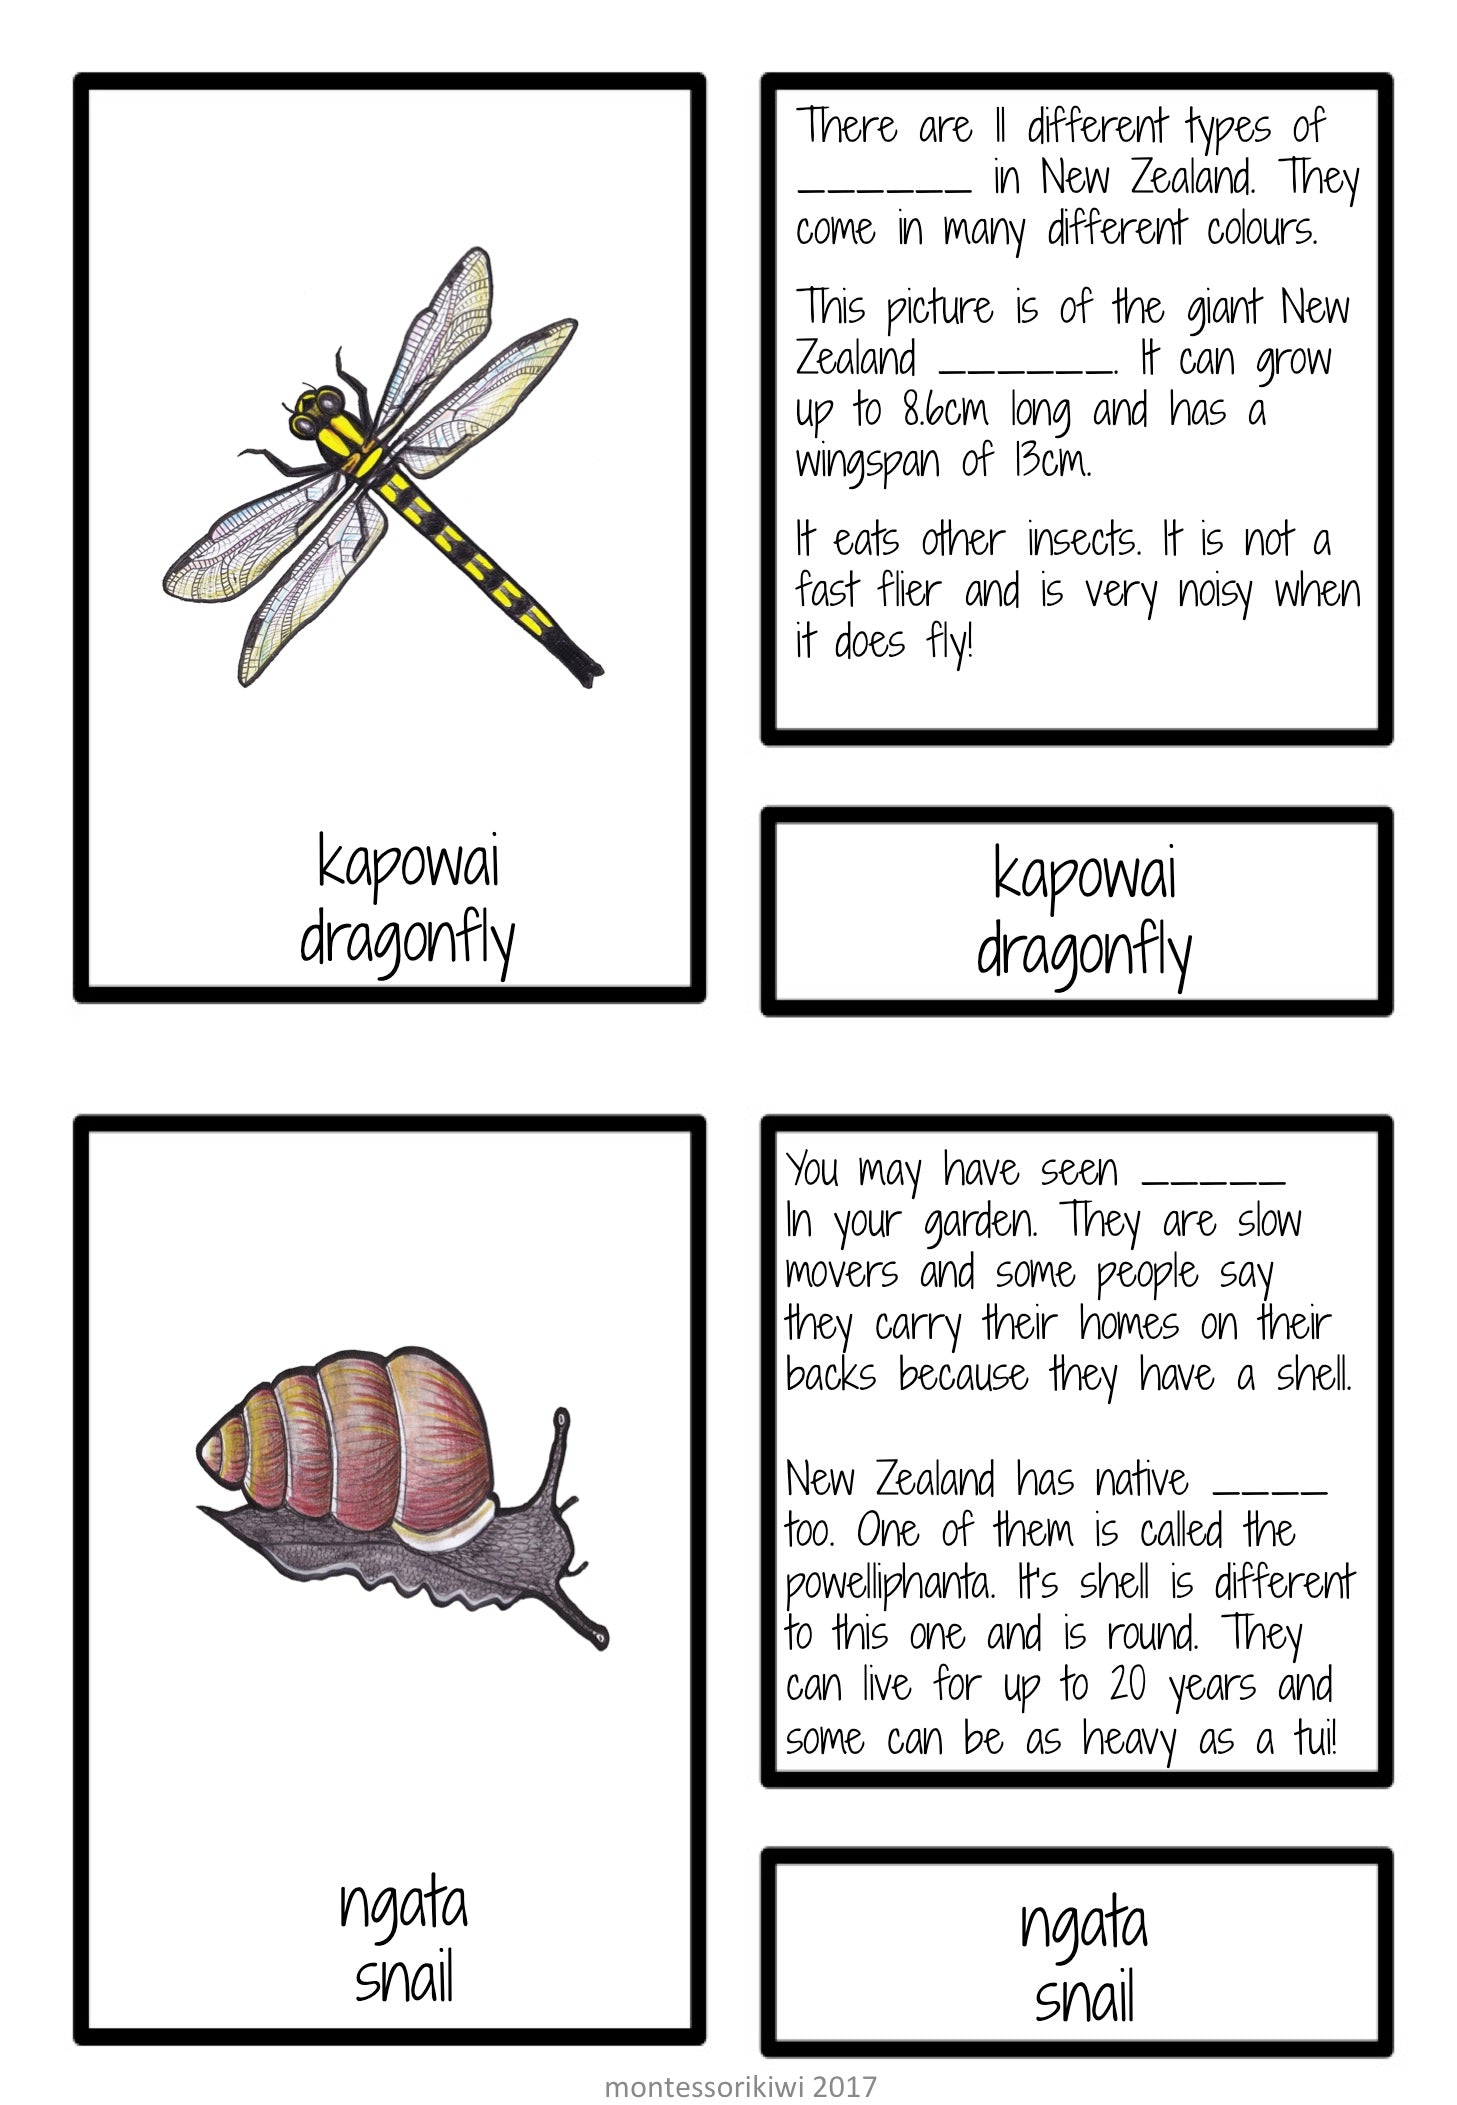 New Zealand invertebrate facts (Montessori inspired) - montessorikiwi